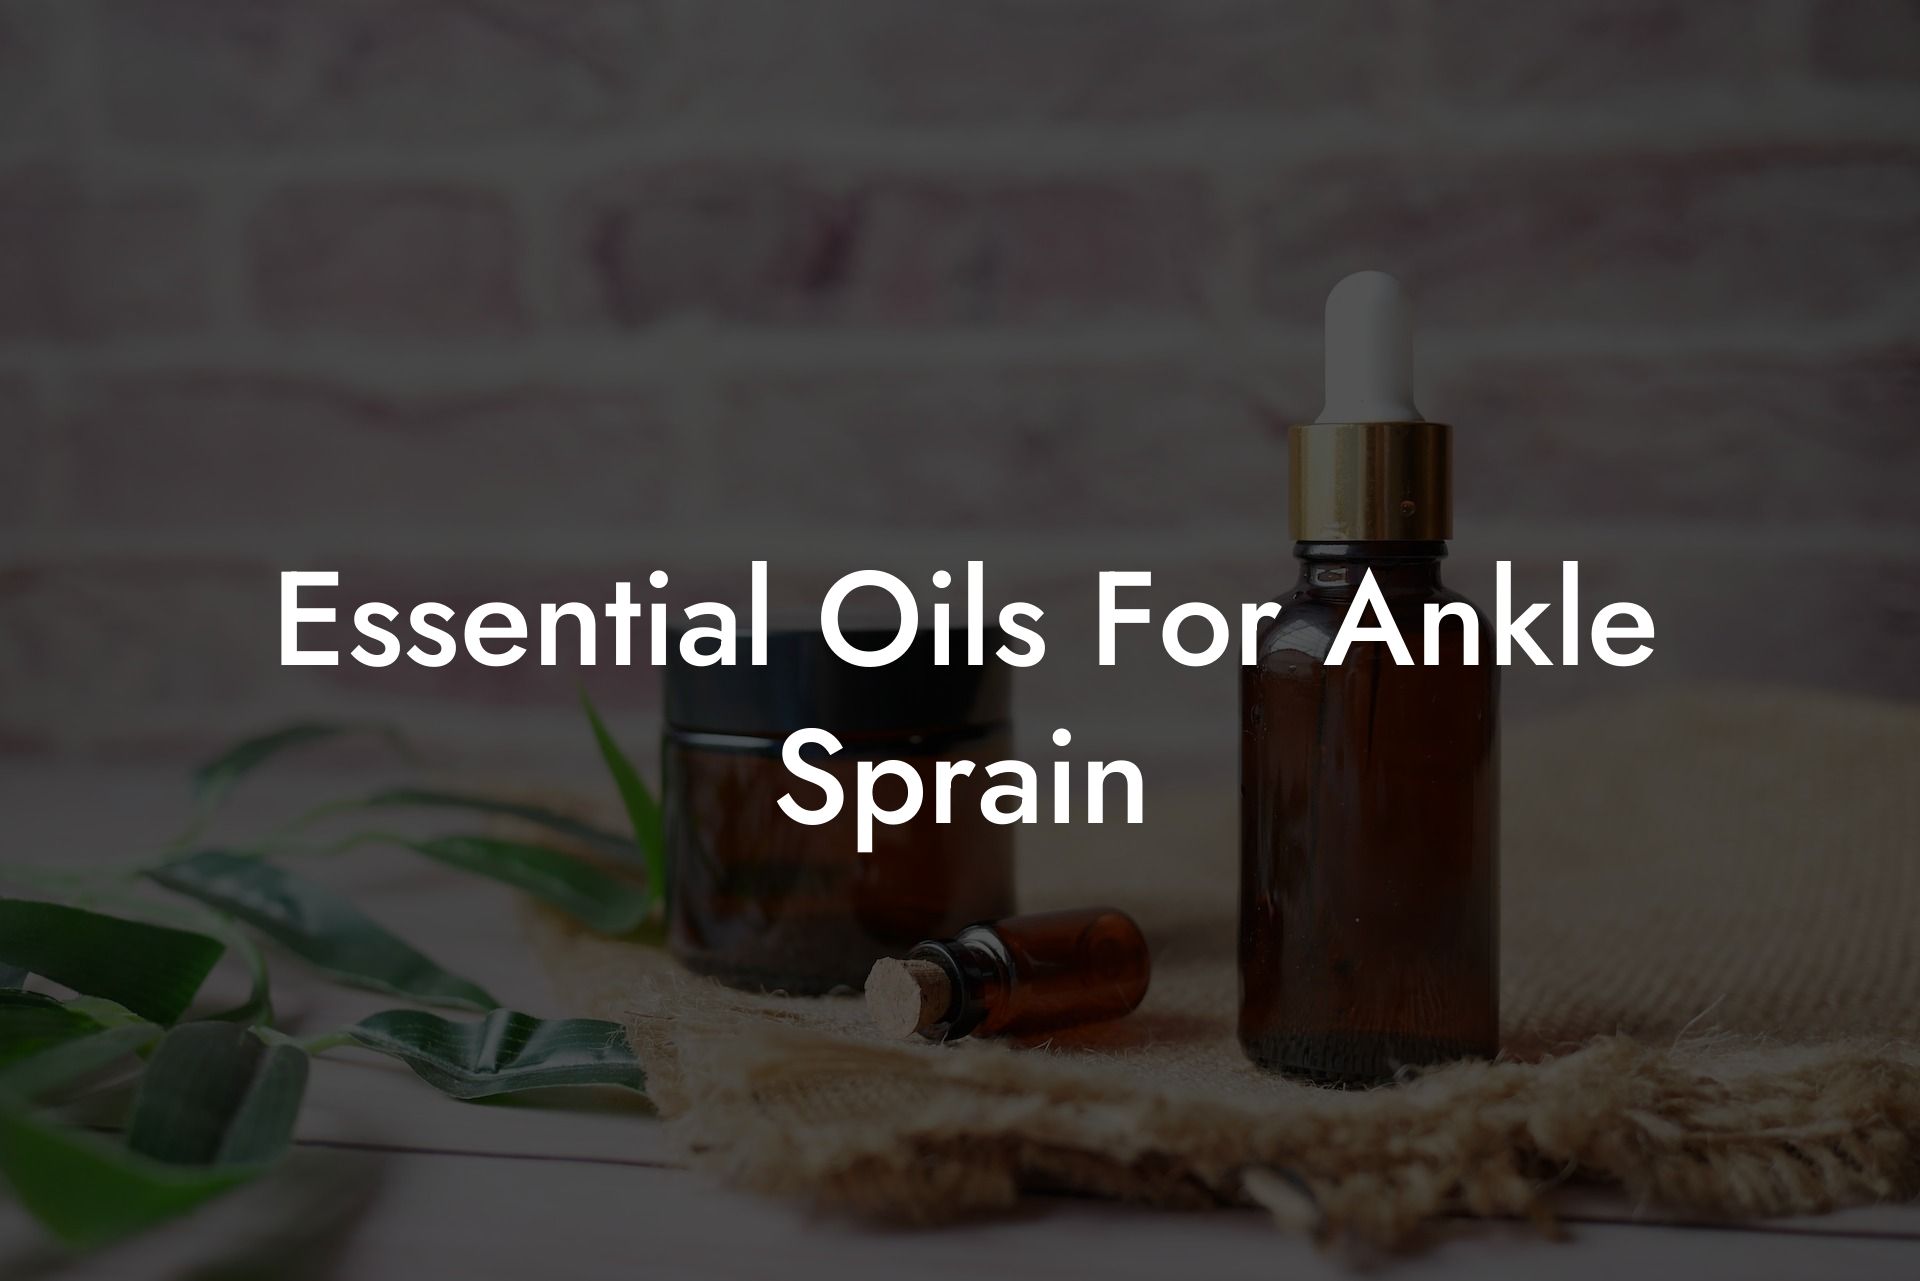 Essential Oils For Ankle Sprain